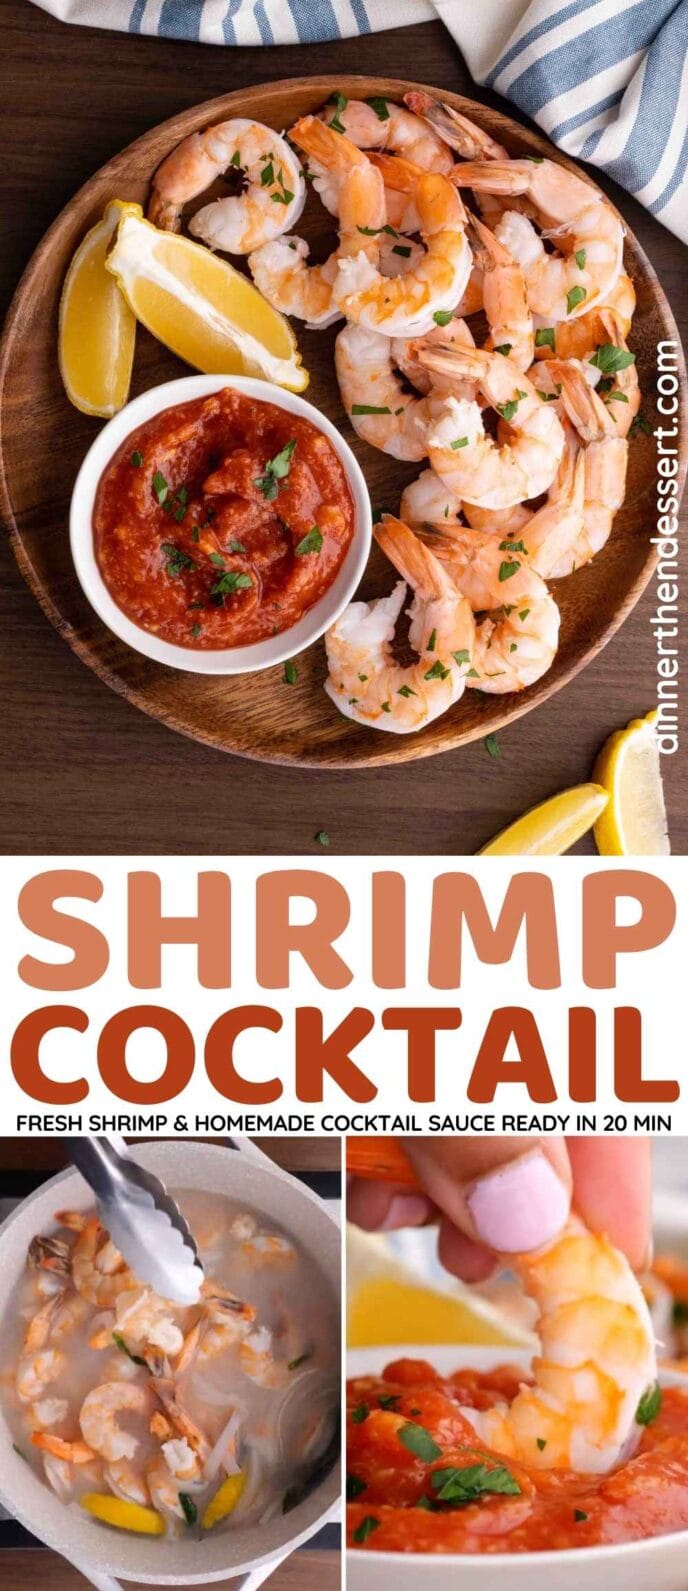 Shrimp Cocktail Collage